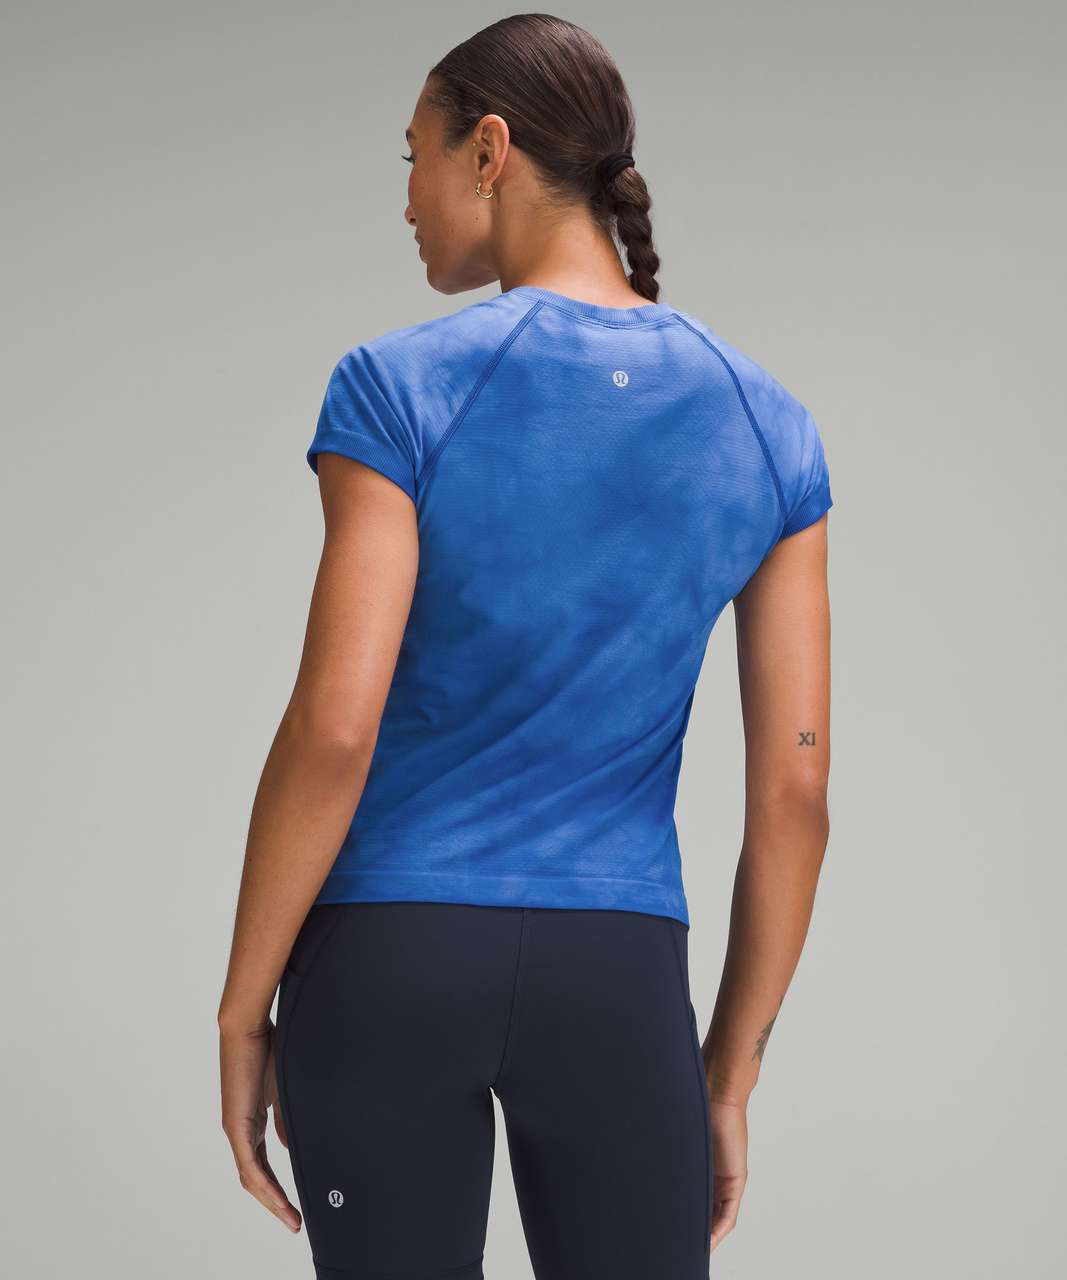 Lululemon Swiftly Tech Short Sleeve Shirt 2.0 *Race Length - Marble Dye Pipe Dream Blue / Symphony Blue